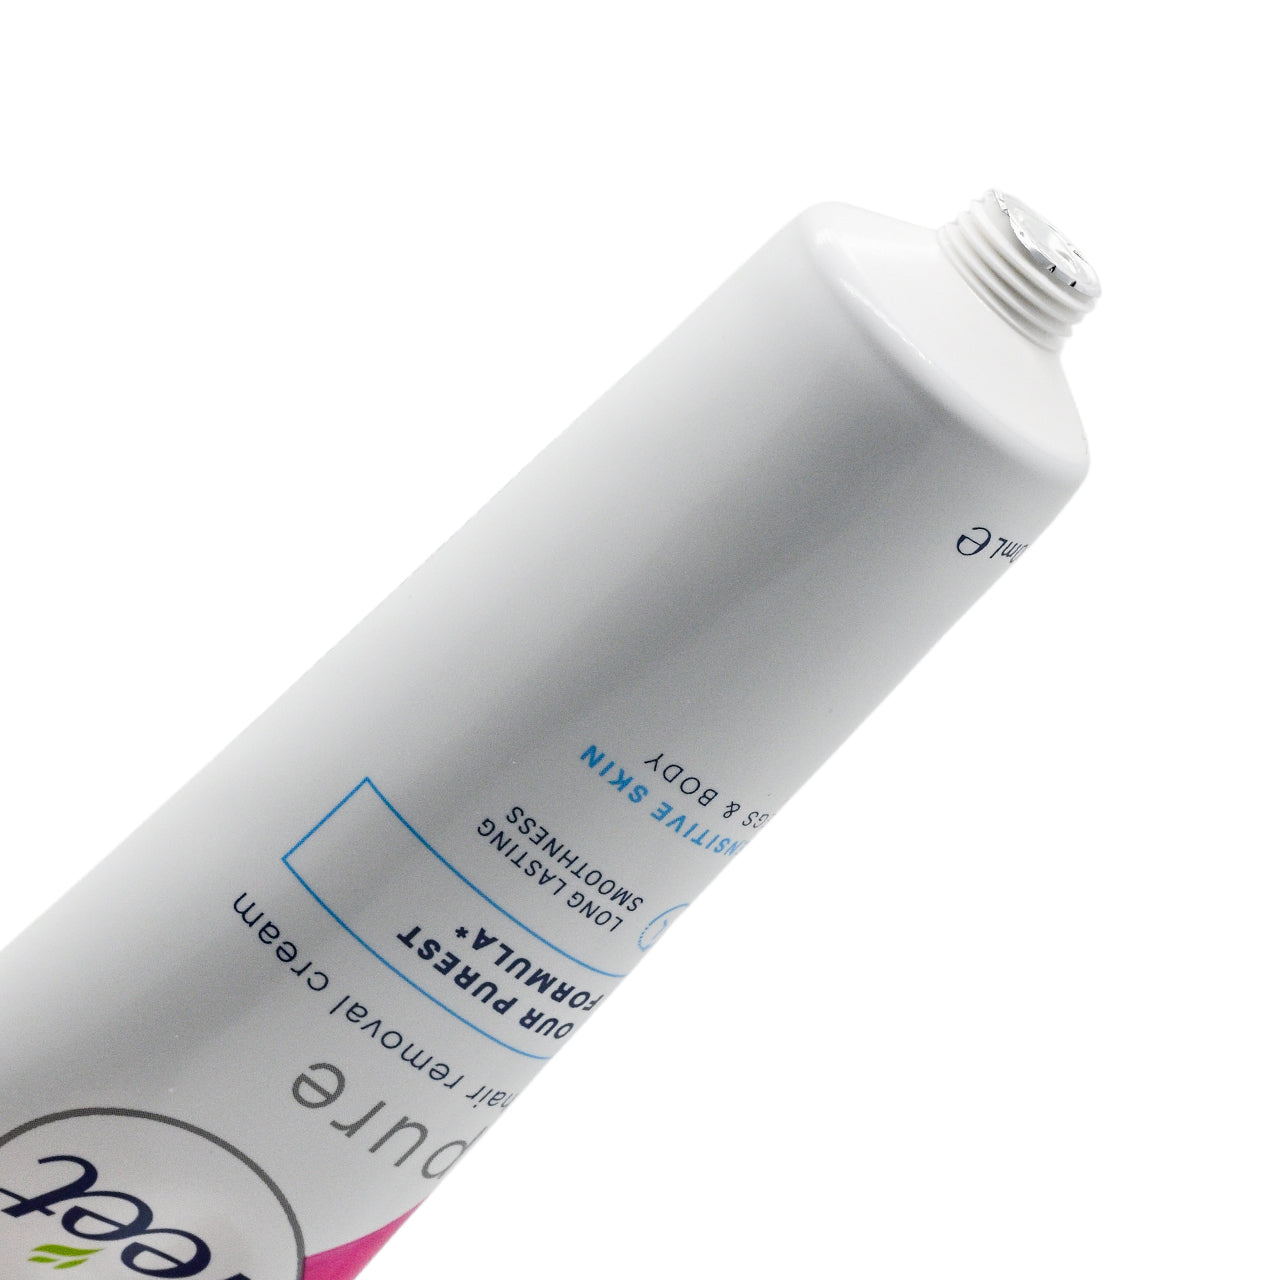 Veet Removal Cream Sensitive Skin 100ML | Sasa Global eShop